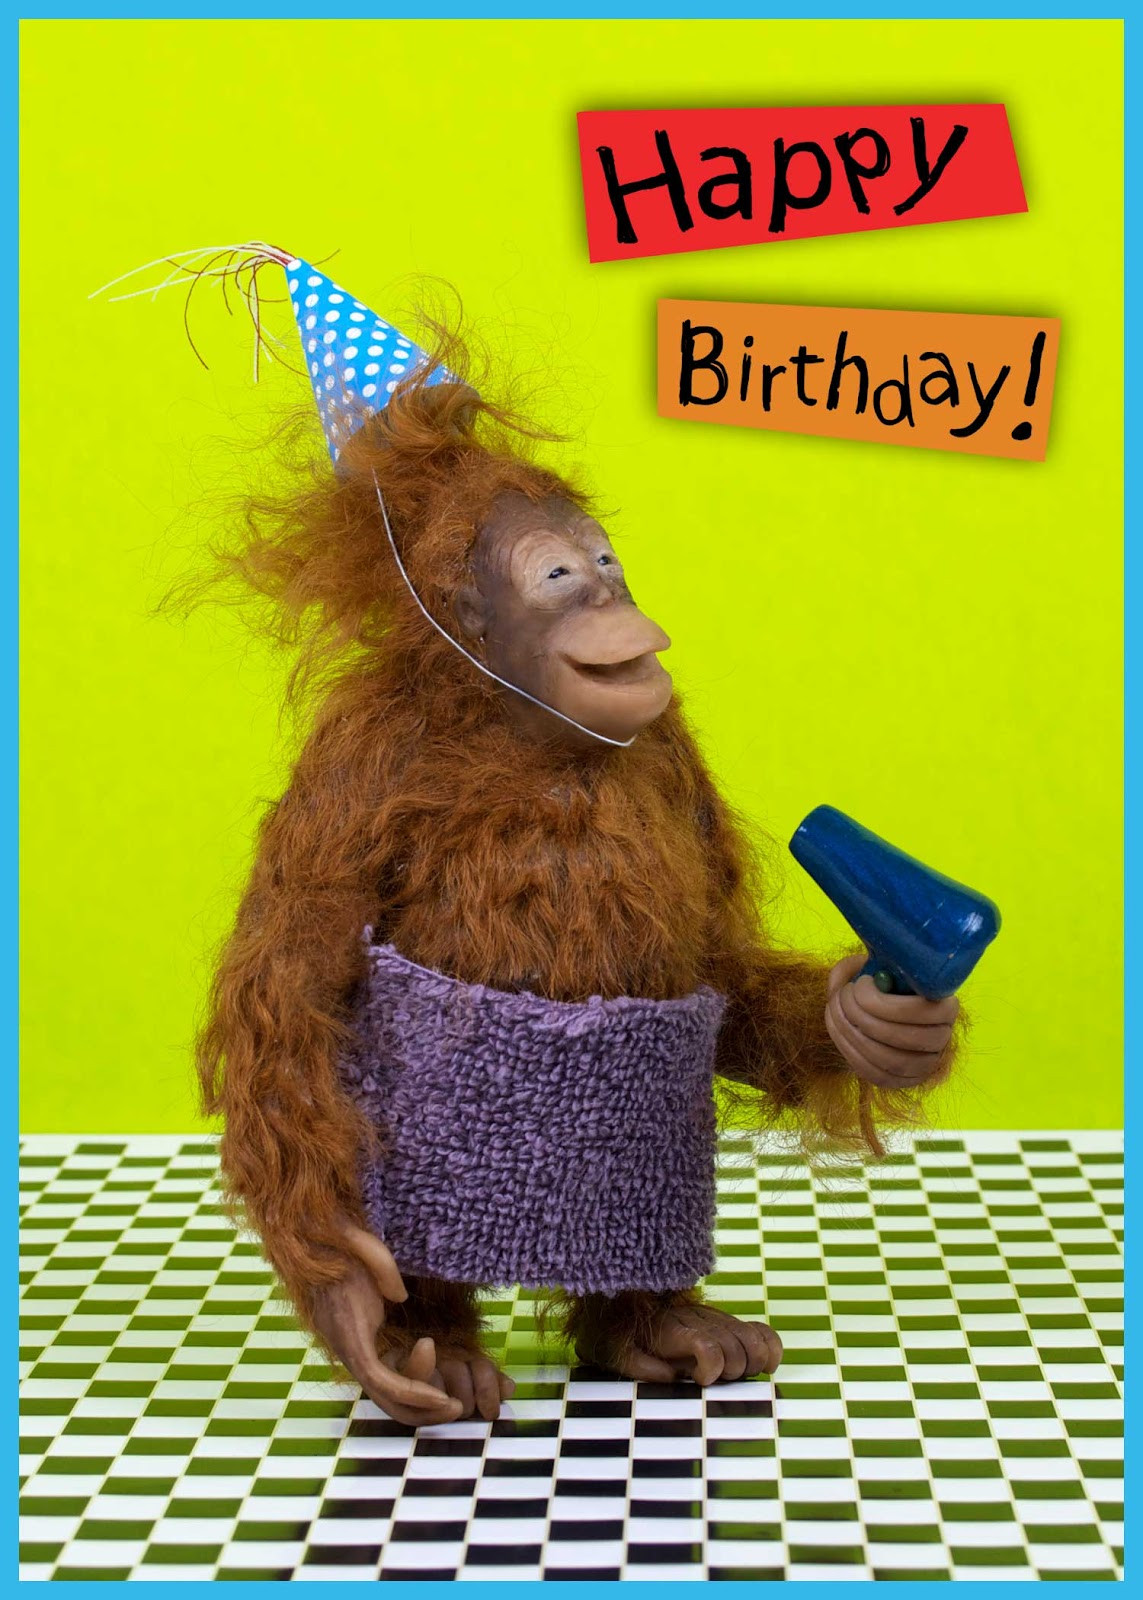 Funny Birthday Card Images
 Caroline Gray Work in Progress Kids’ Birthday Cards